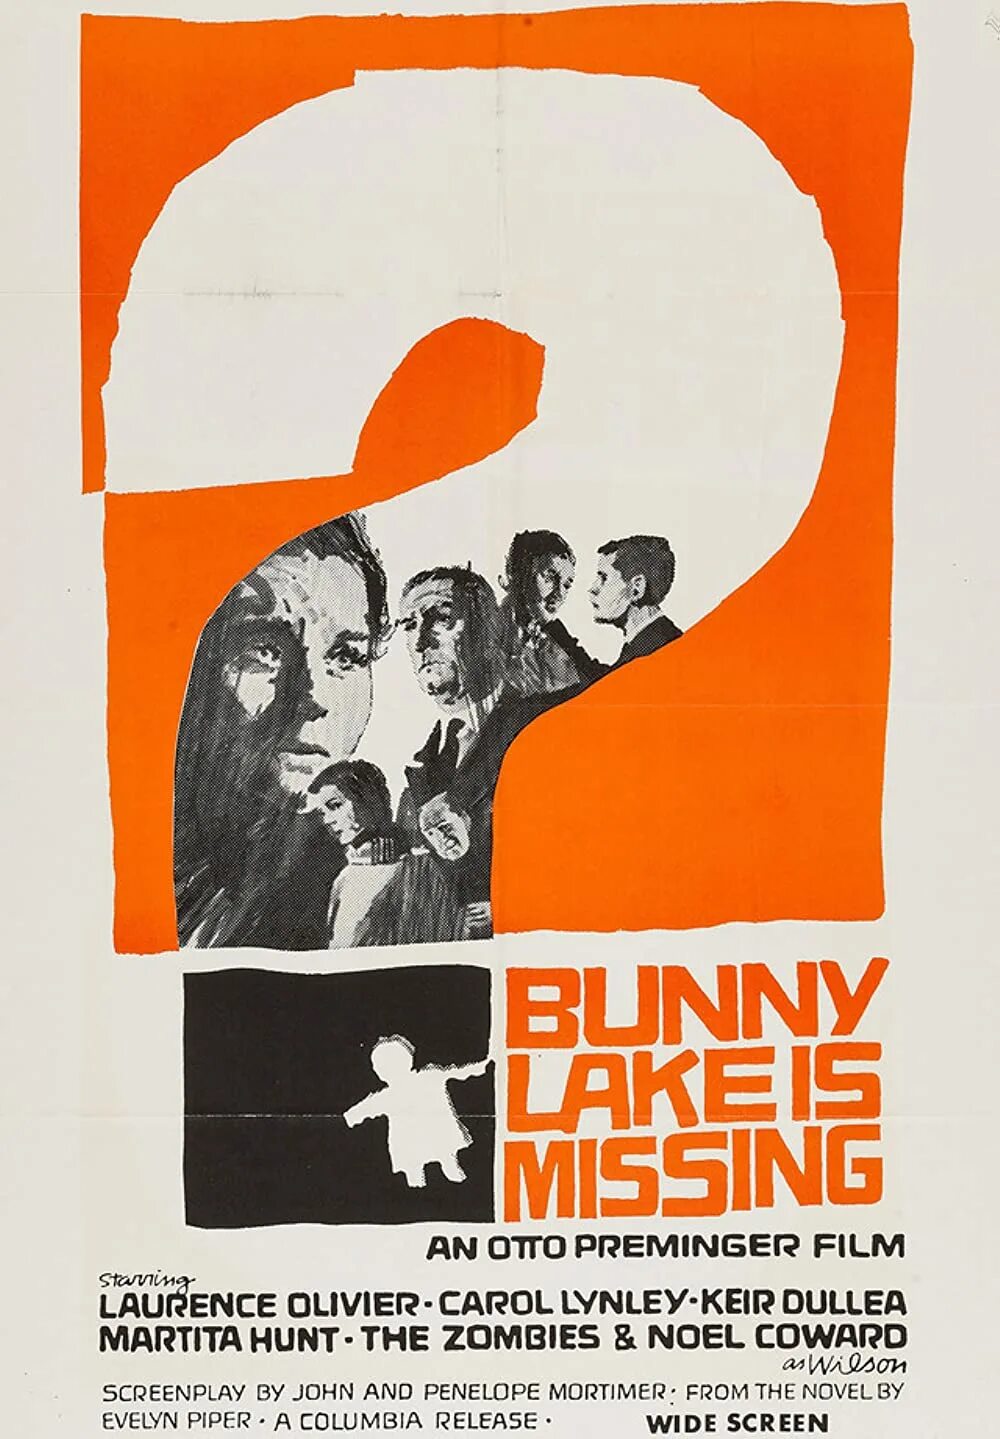 Bunny Lake is missing (1965). Постер missing. Gone missing плакат русский. Bunny lake